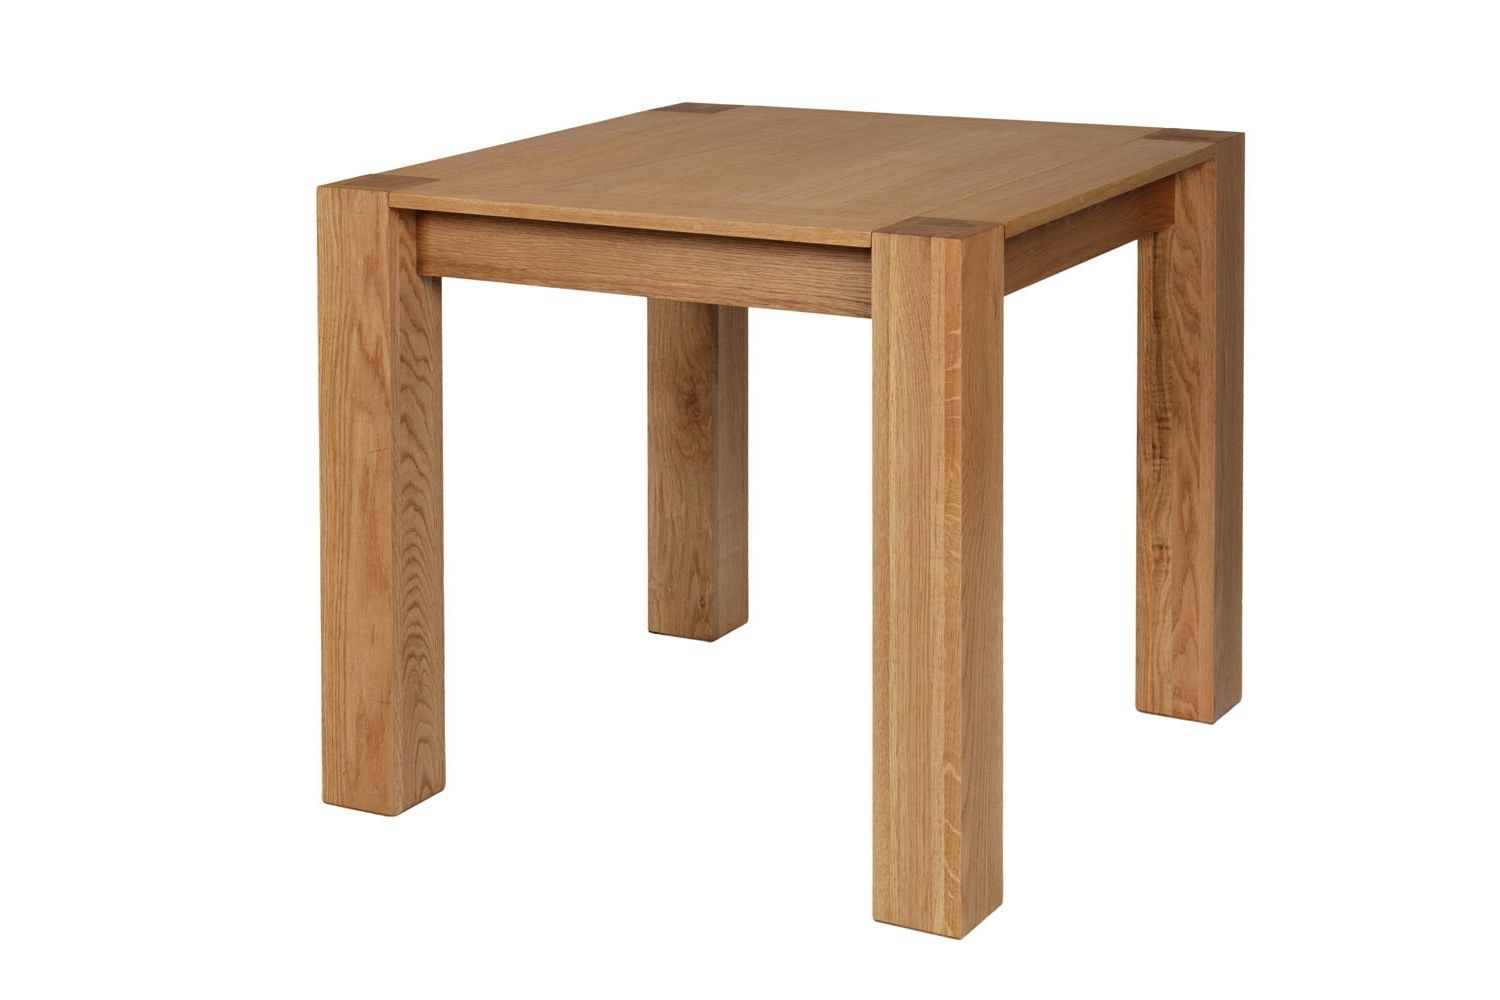 2018 Cambridge Small Square Oak Kitchen Table 80cm X 80cm In Small Oak Dining Tables (View 9 of 25)